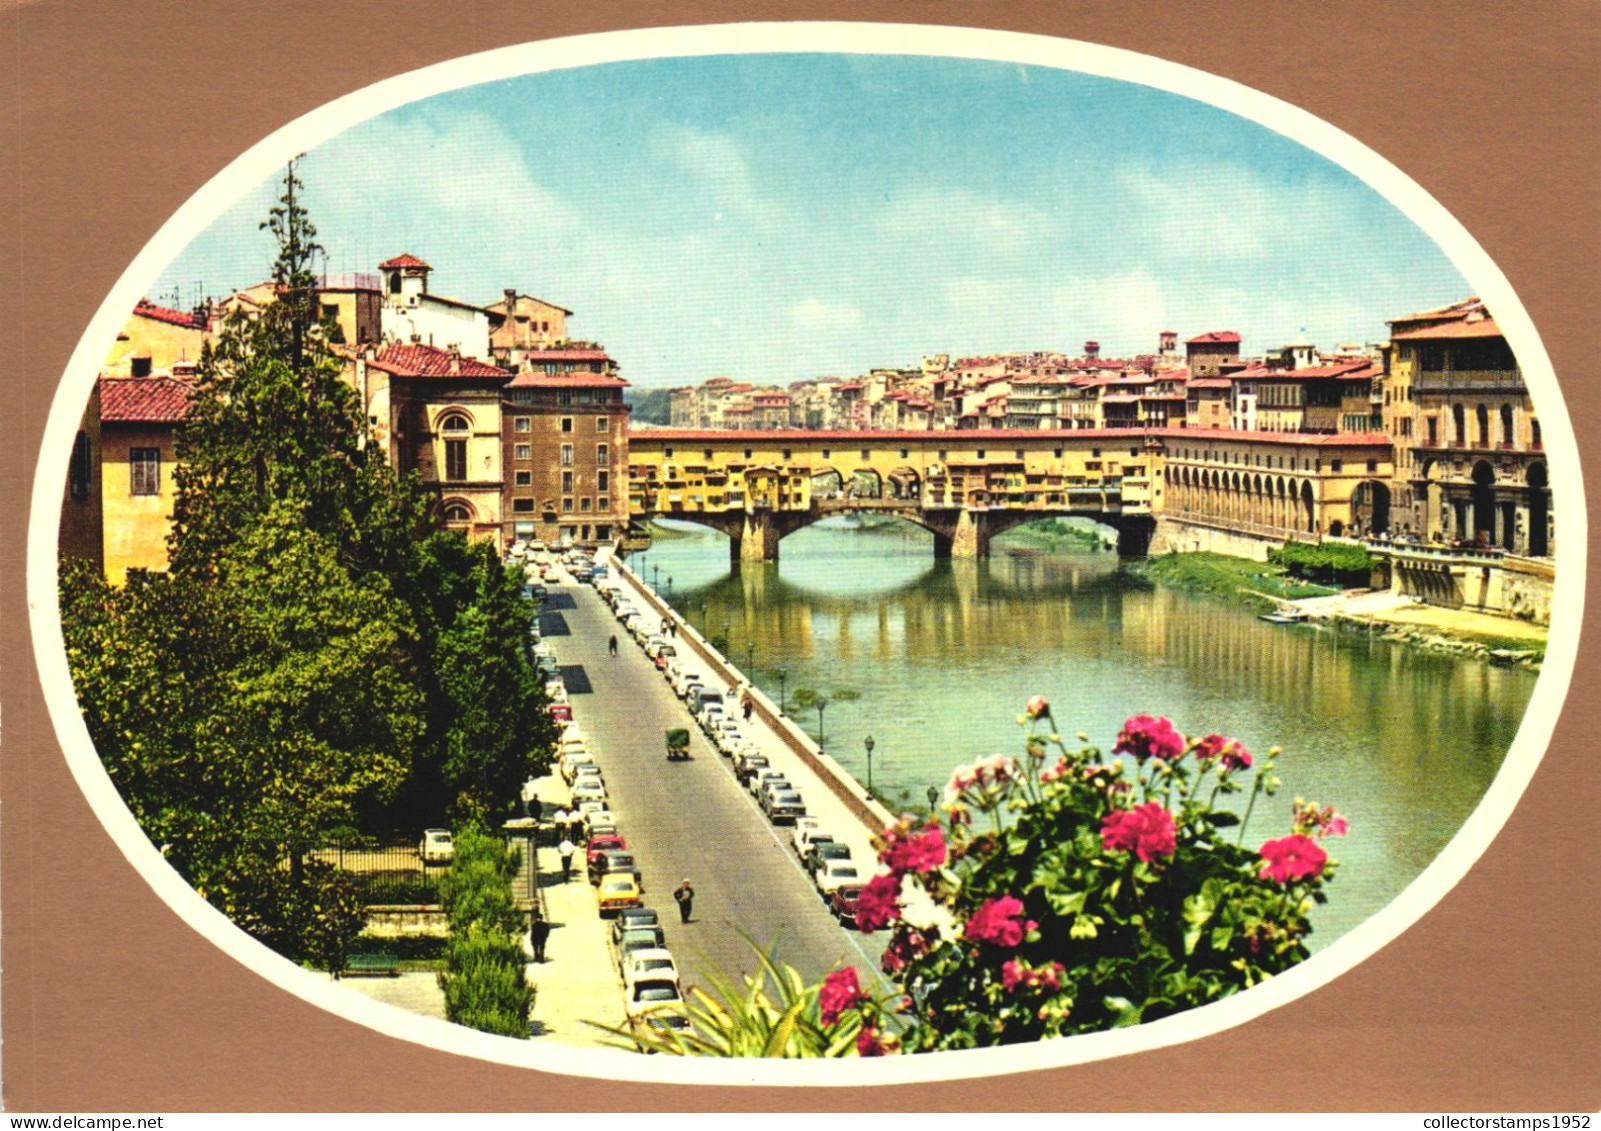 FIRENZE, TOSCANA, BRIDGE, ARCHITECTURE, CARS, ITALY, POSTCARD - Firenze (Florence)